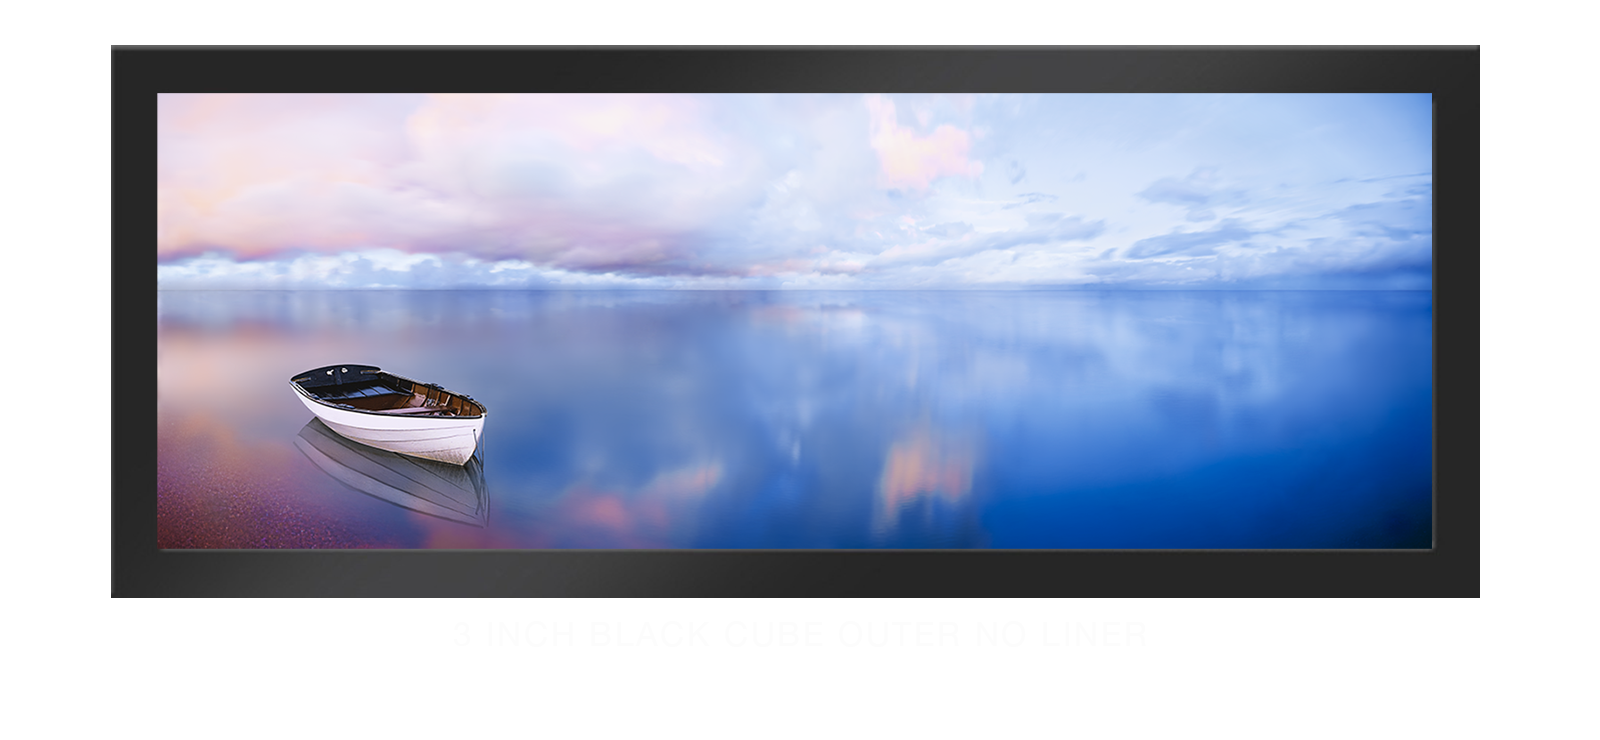 13BLUELAKEBOAT 3 Inch Black Cube Outer w_No Liner T